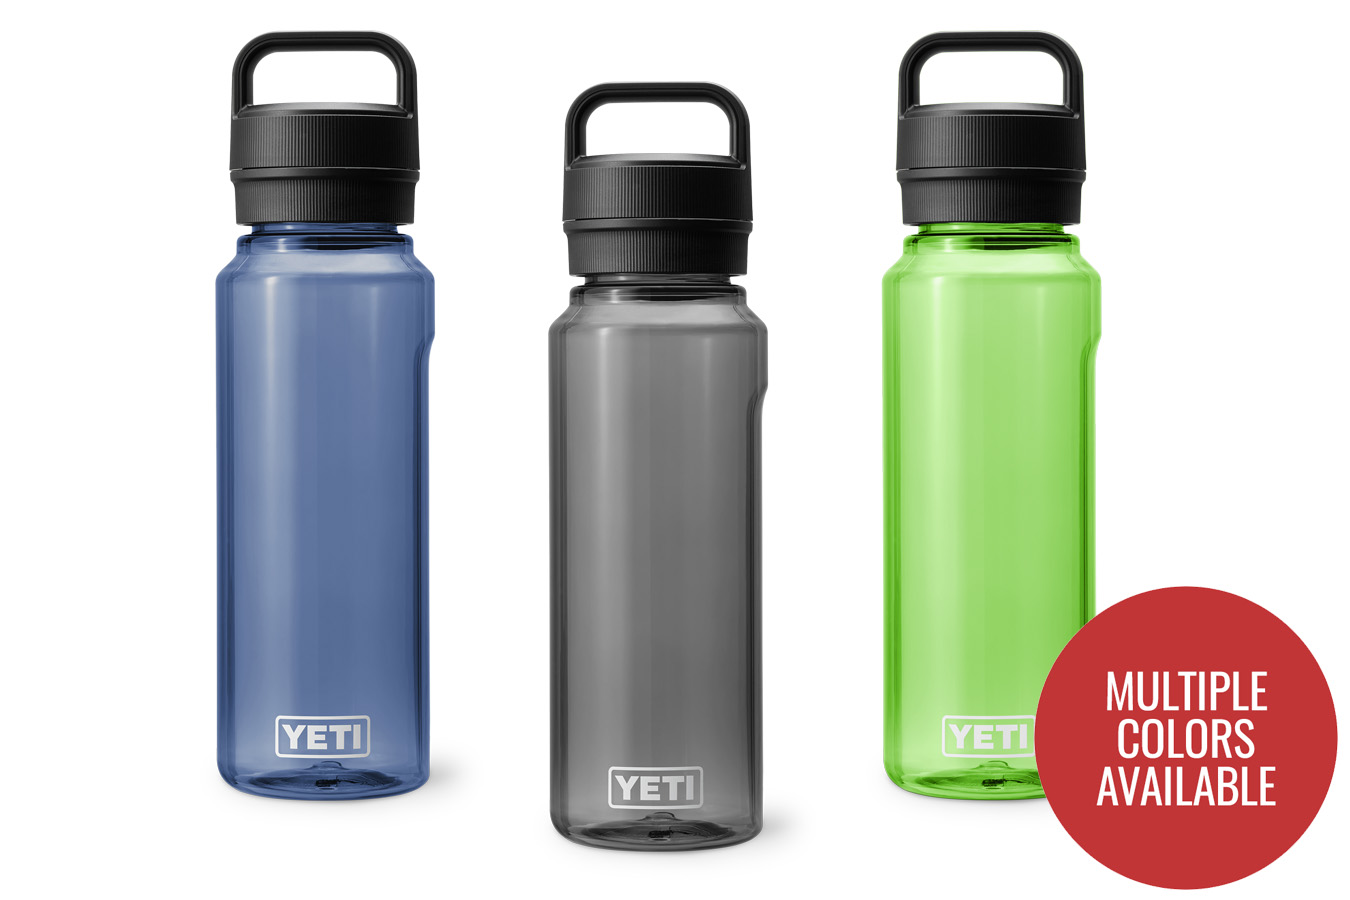  YETI Yonder 750 ml/25 oz Water Bottle with Yonder